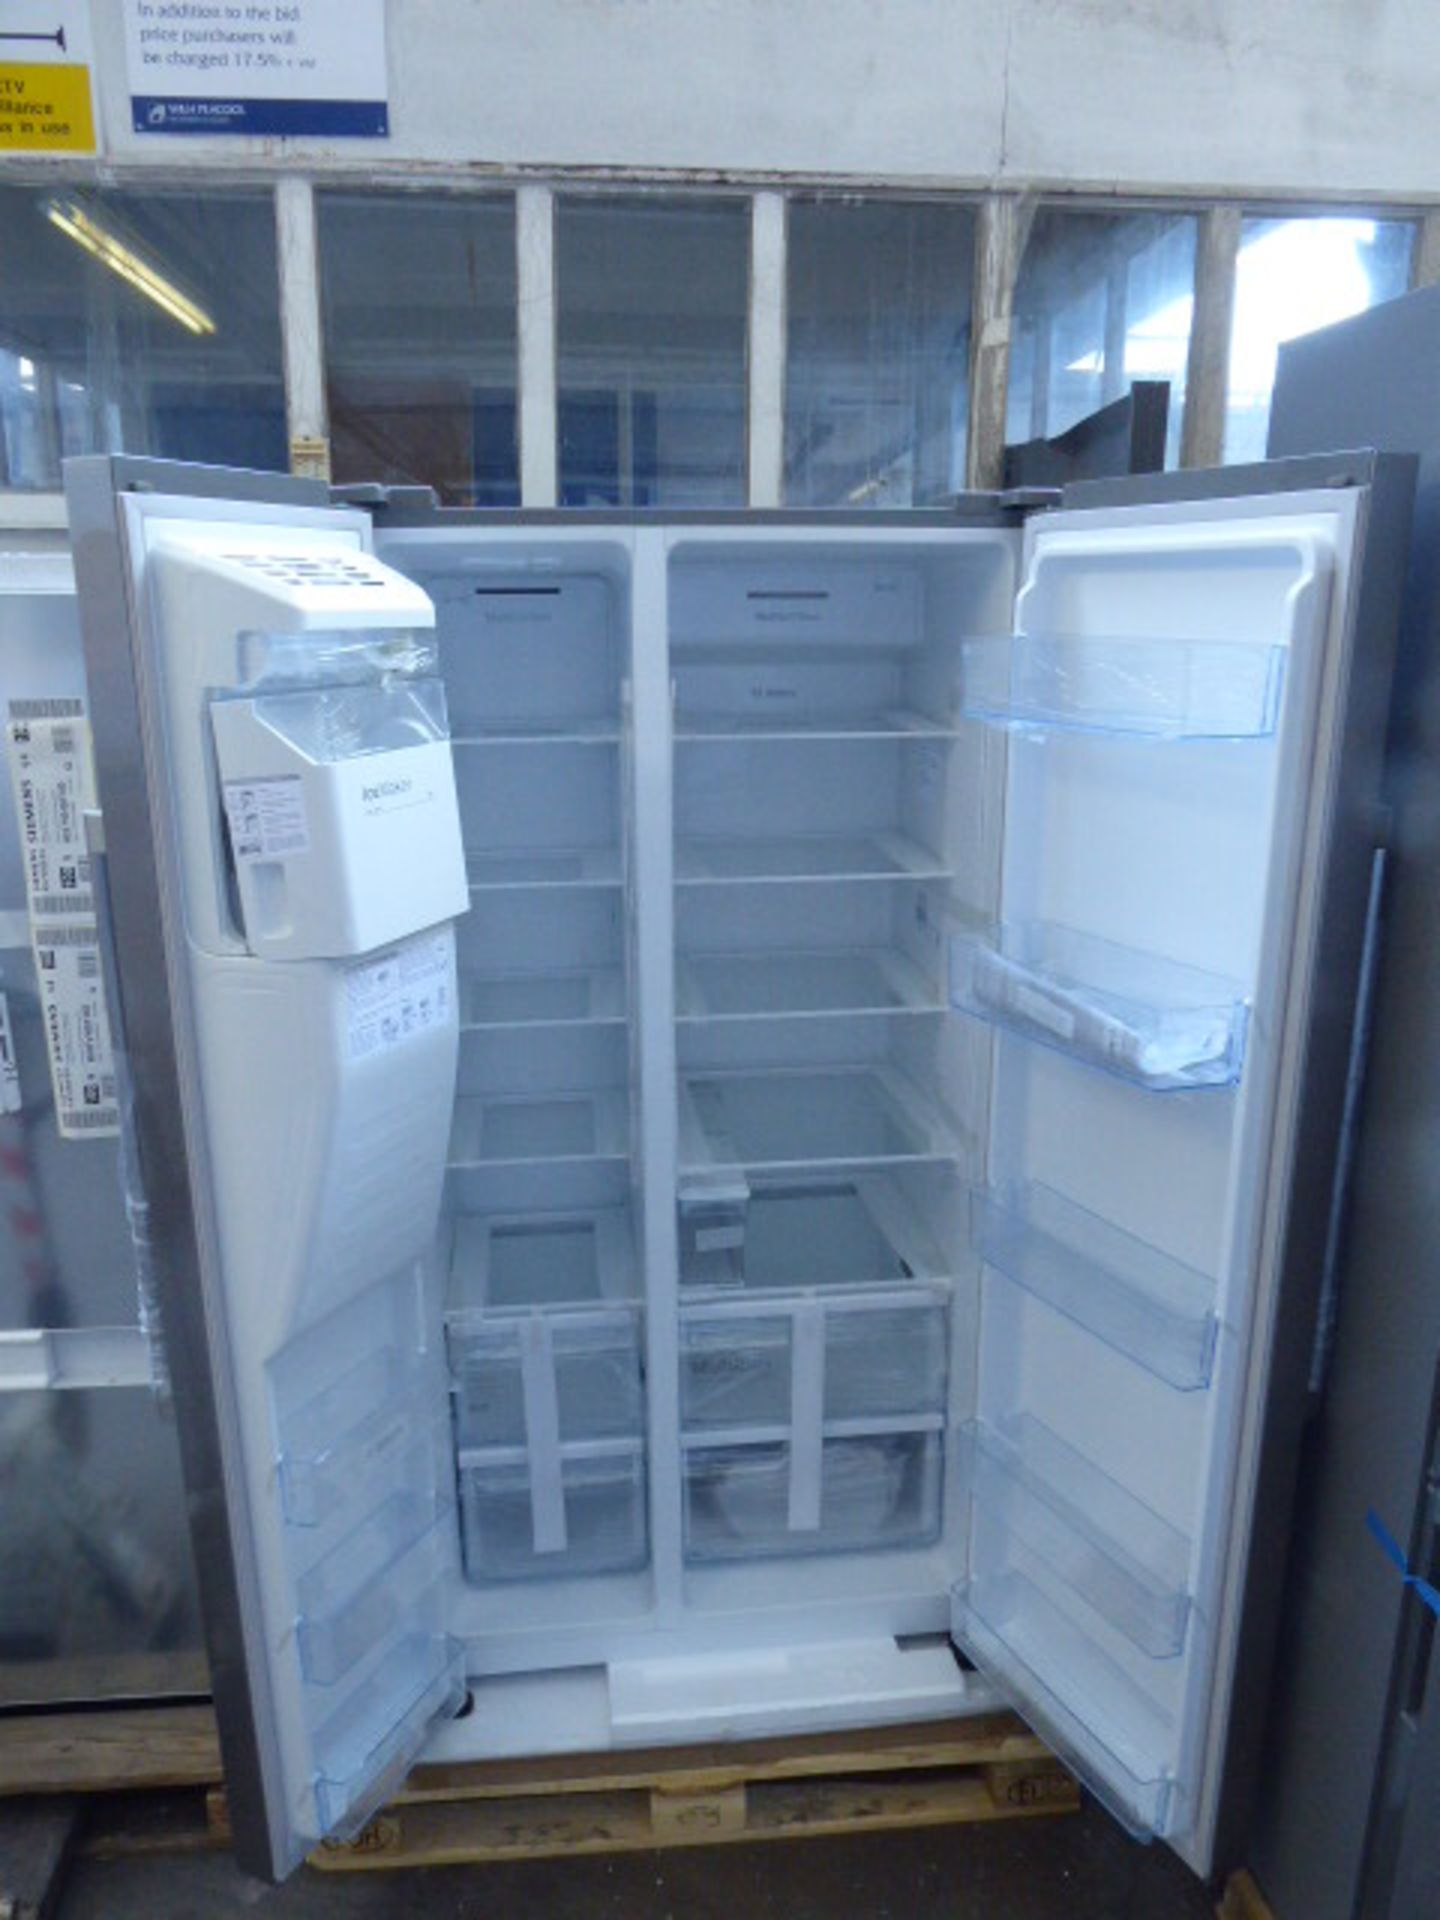 KAI93VIFPGB Bosch Side-by-side fridge-freezer - Image 2 of 2